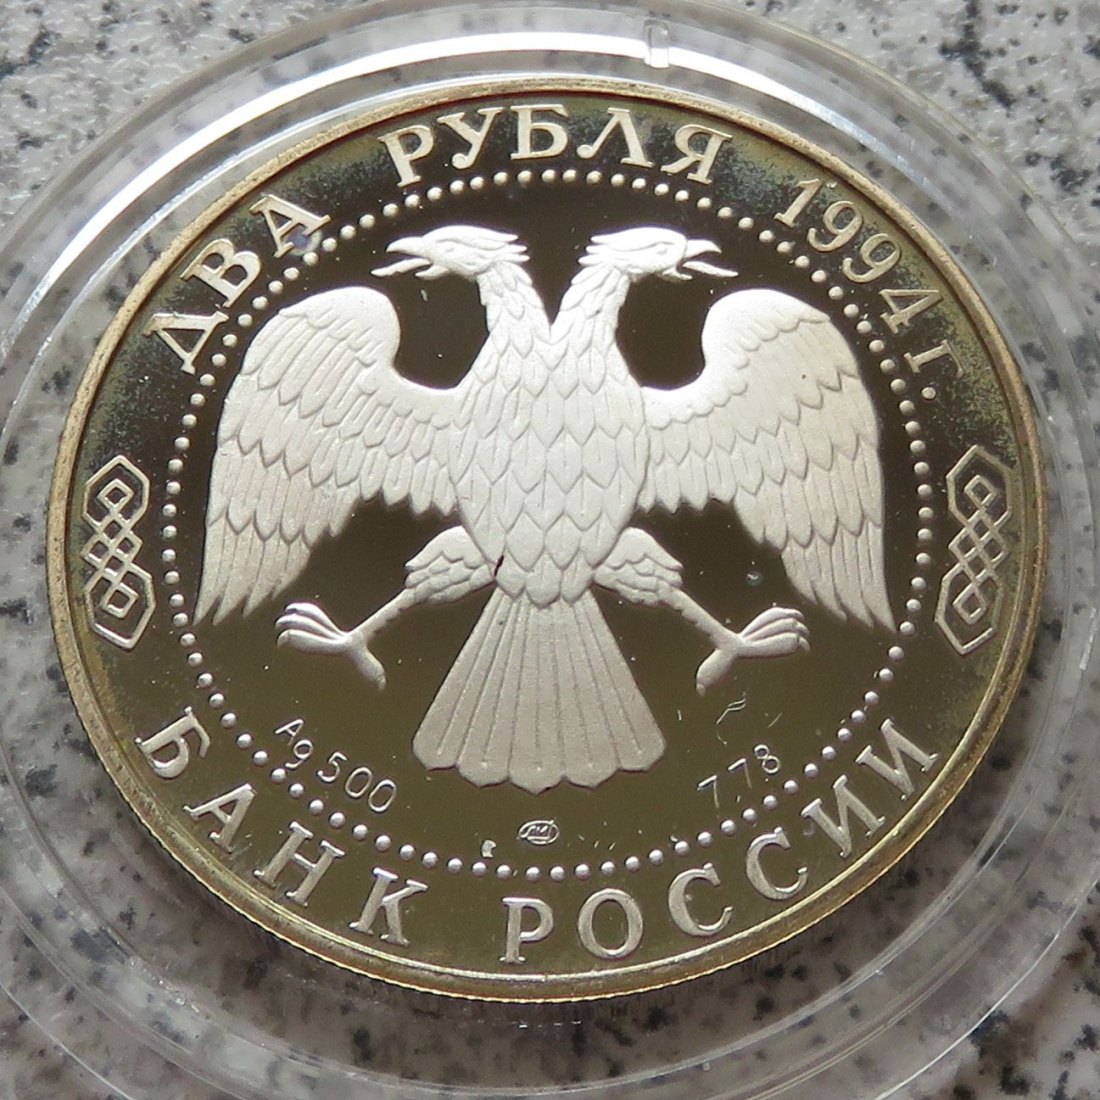  Russland 2 Rubel 1994   